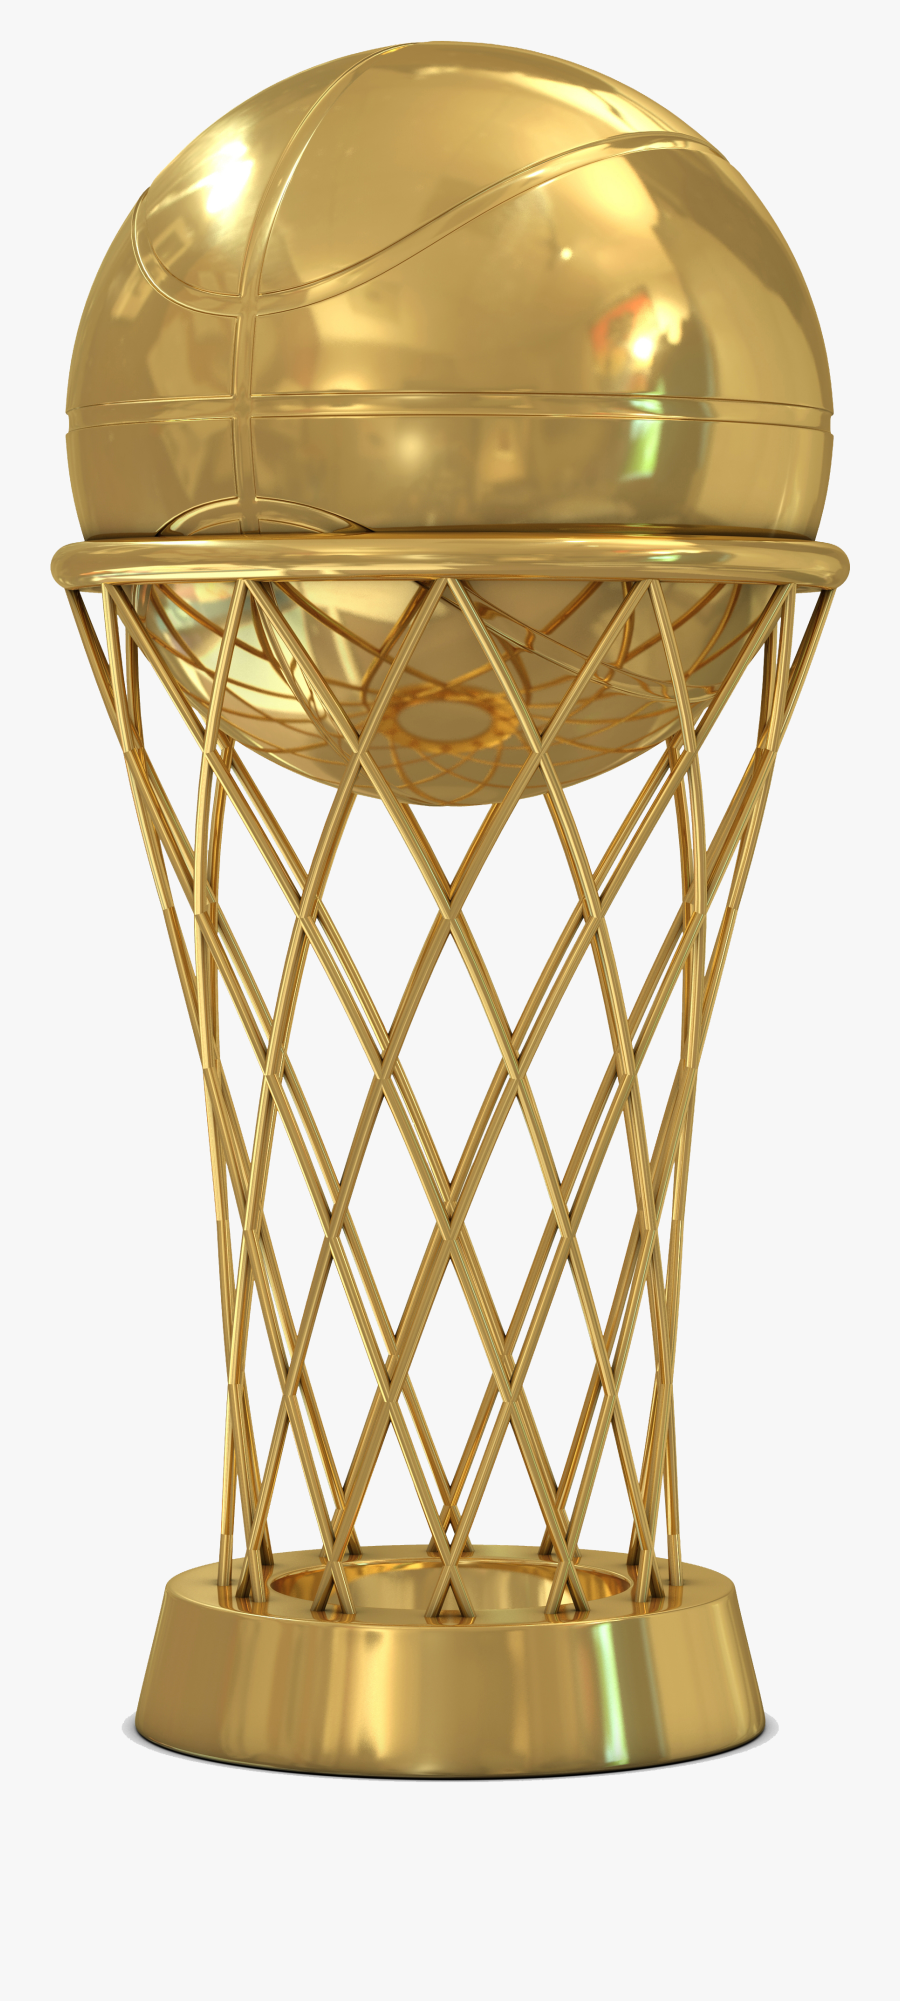 Trophy Golden Basketball Cup National Finals Championship - Basketball Championship Trophy Png, Transparent Clipart